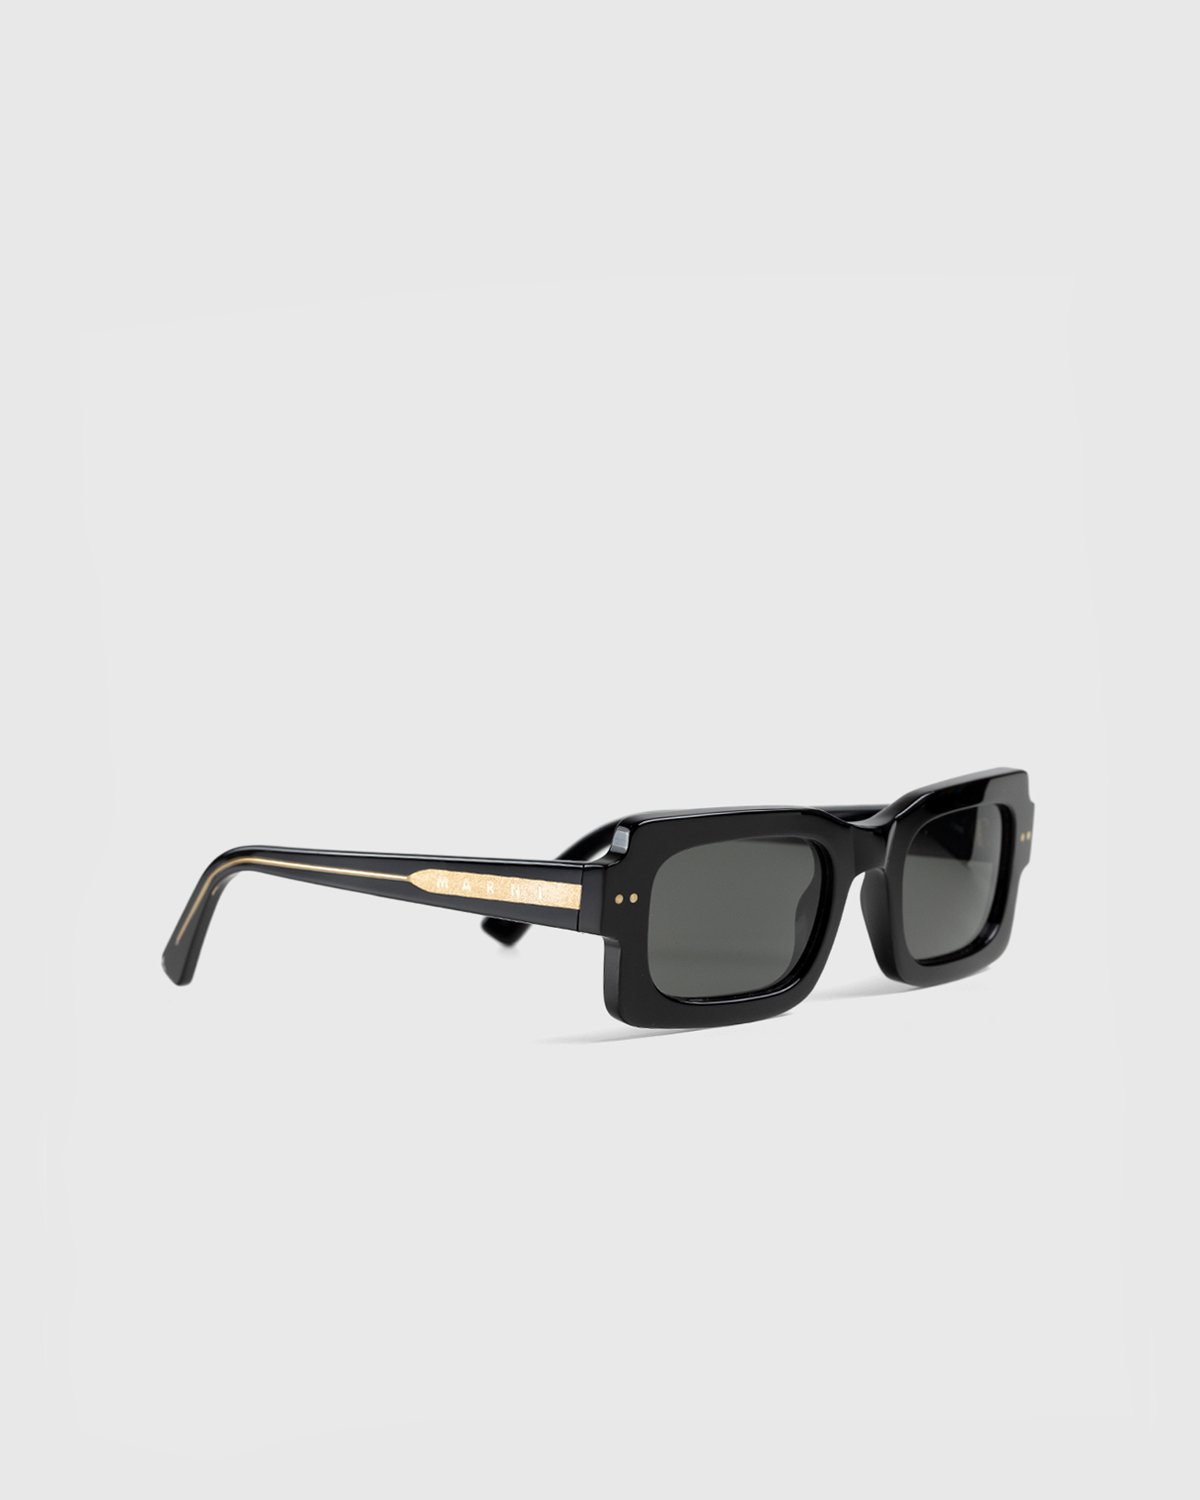 Marni - Lake Vostok Sunglasses Black - Accessories - Black - Image 2